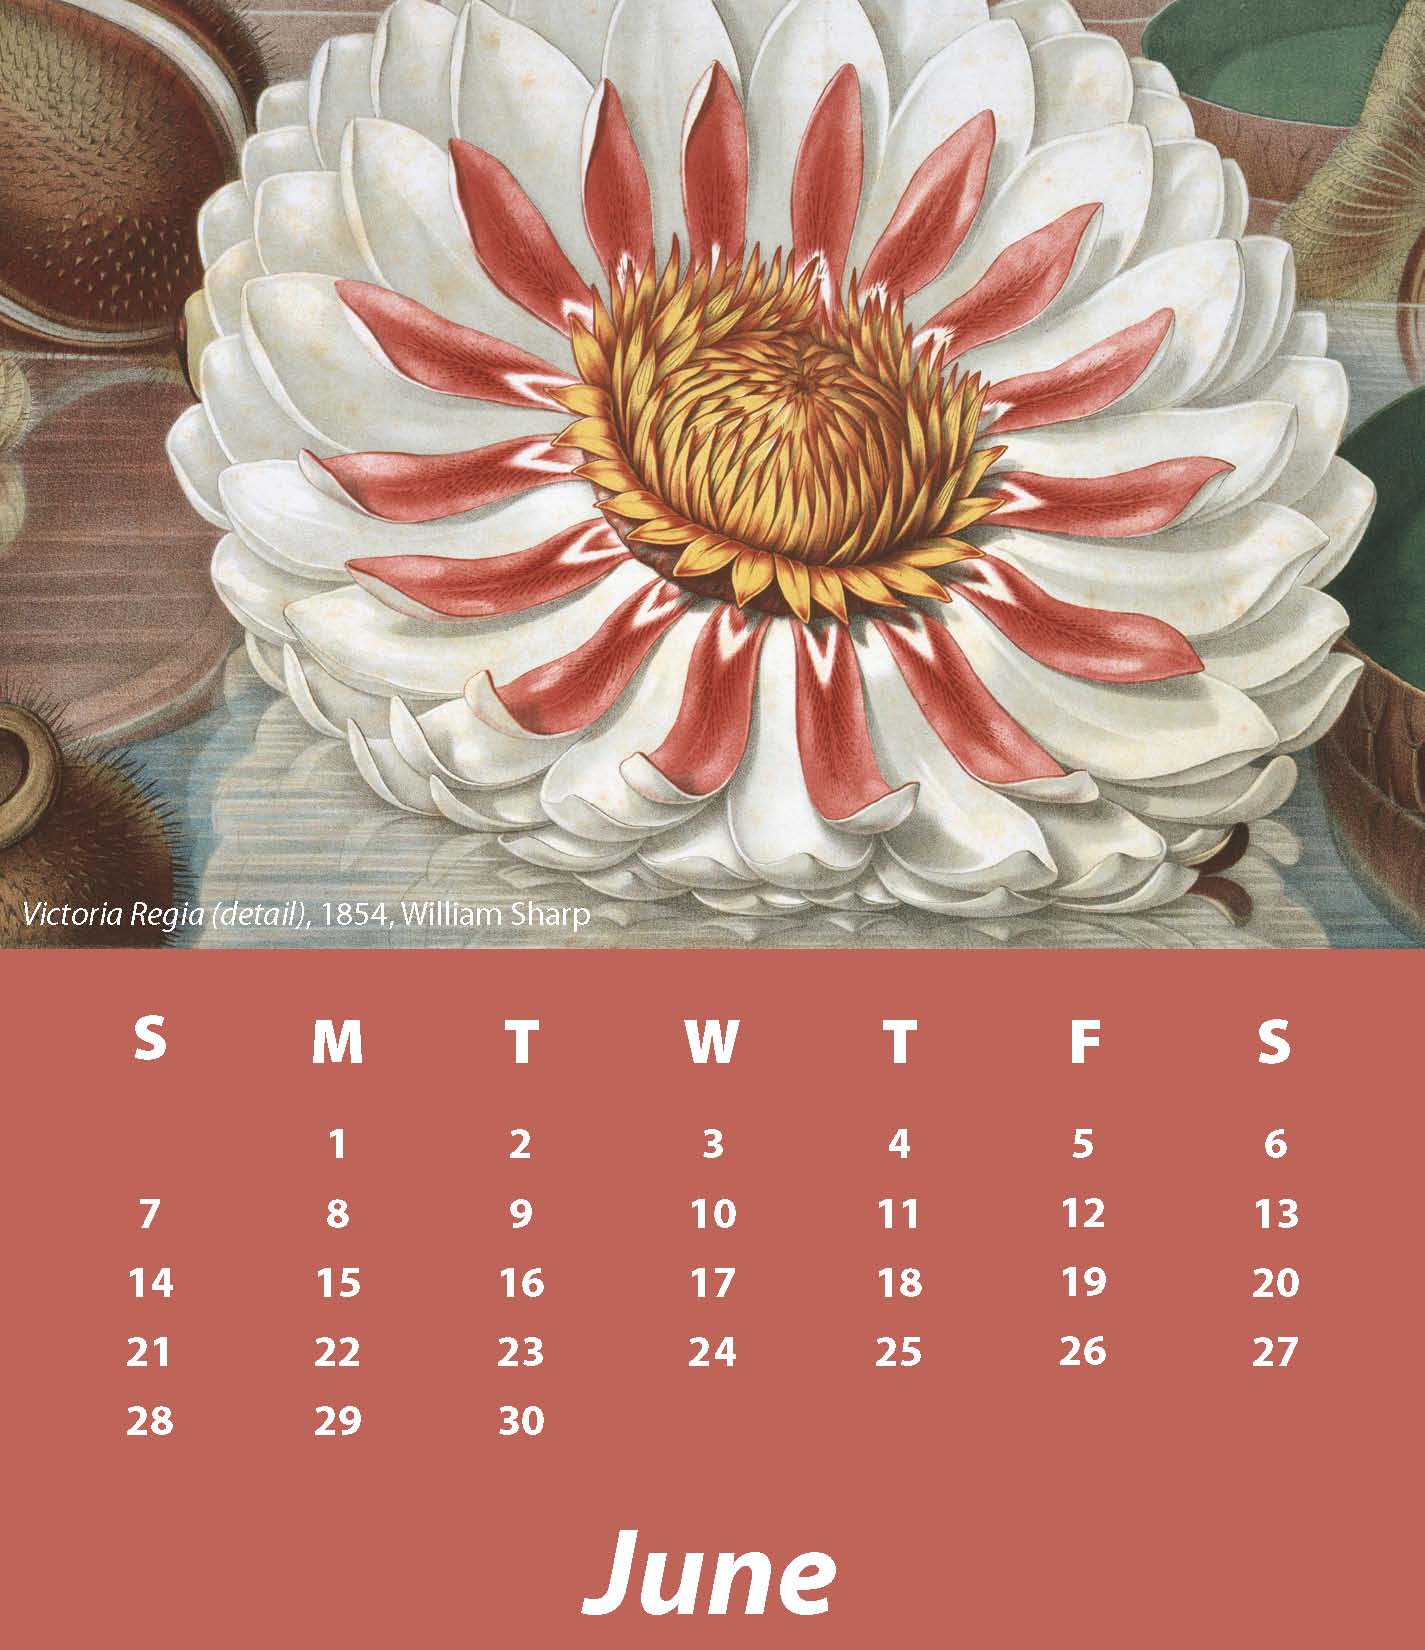 a June calendar with the image Victoria Regia